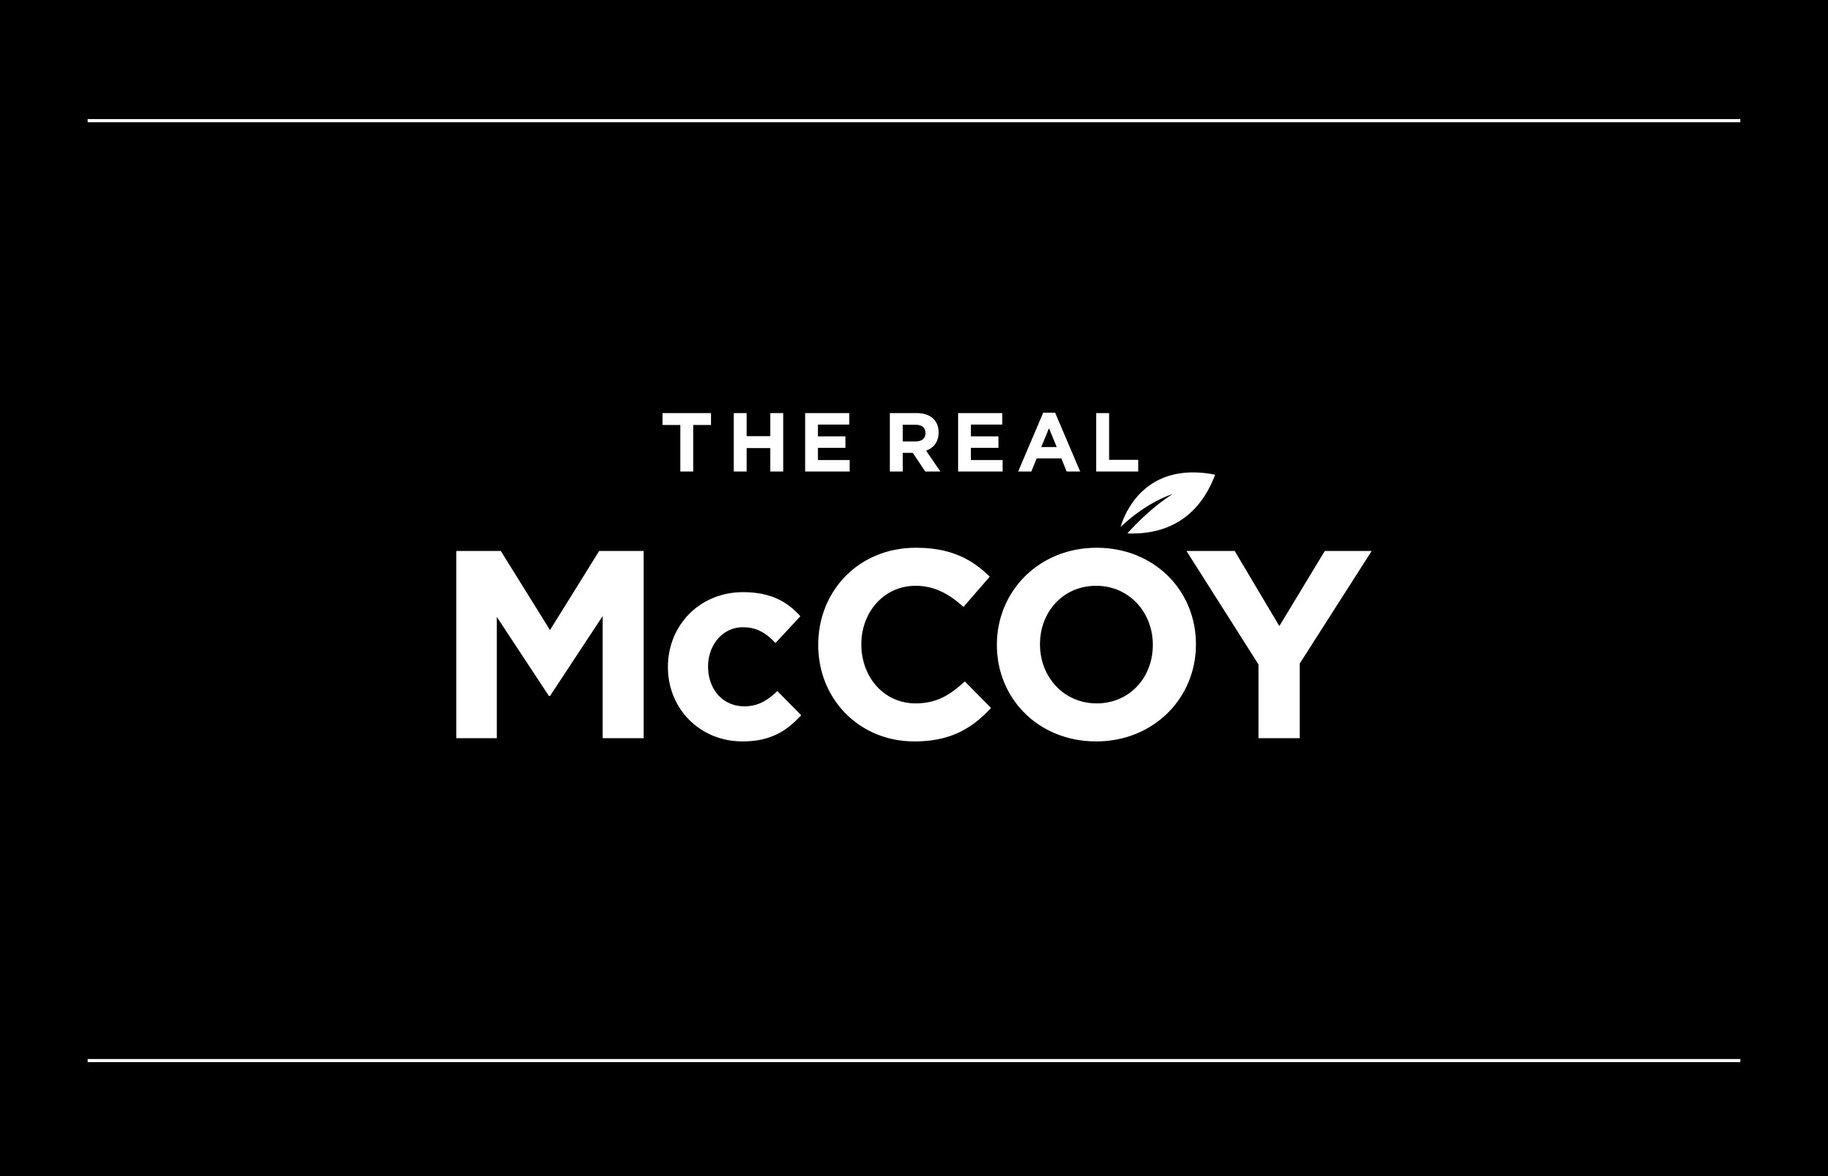 McCoy logo graphic